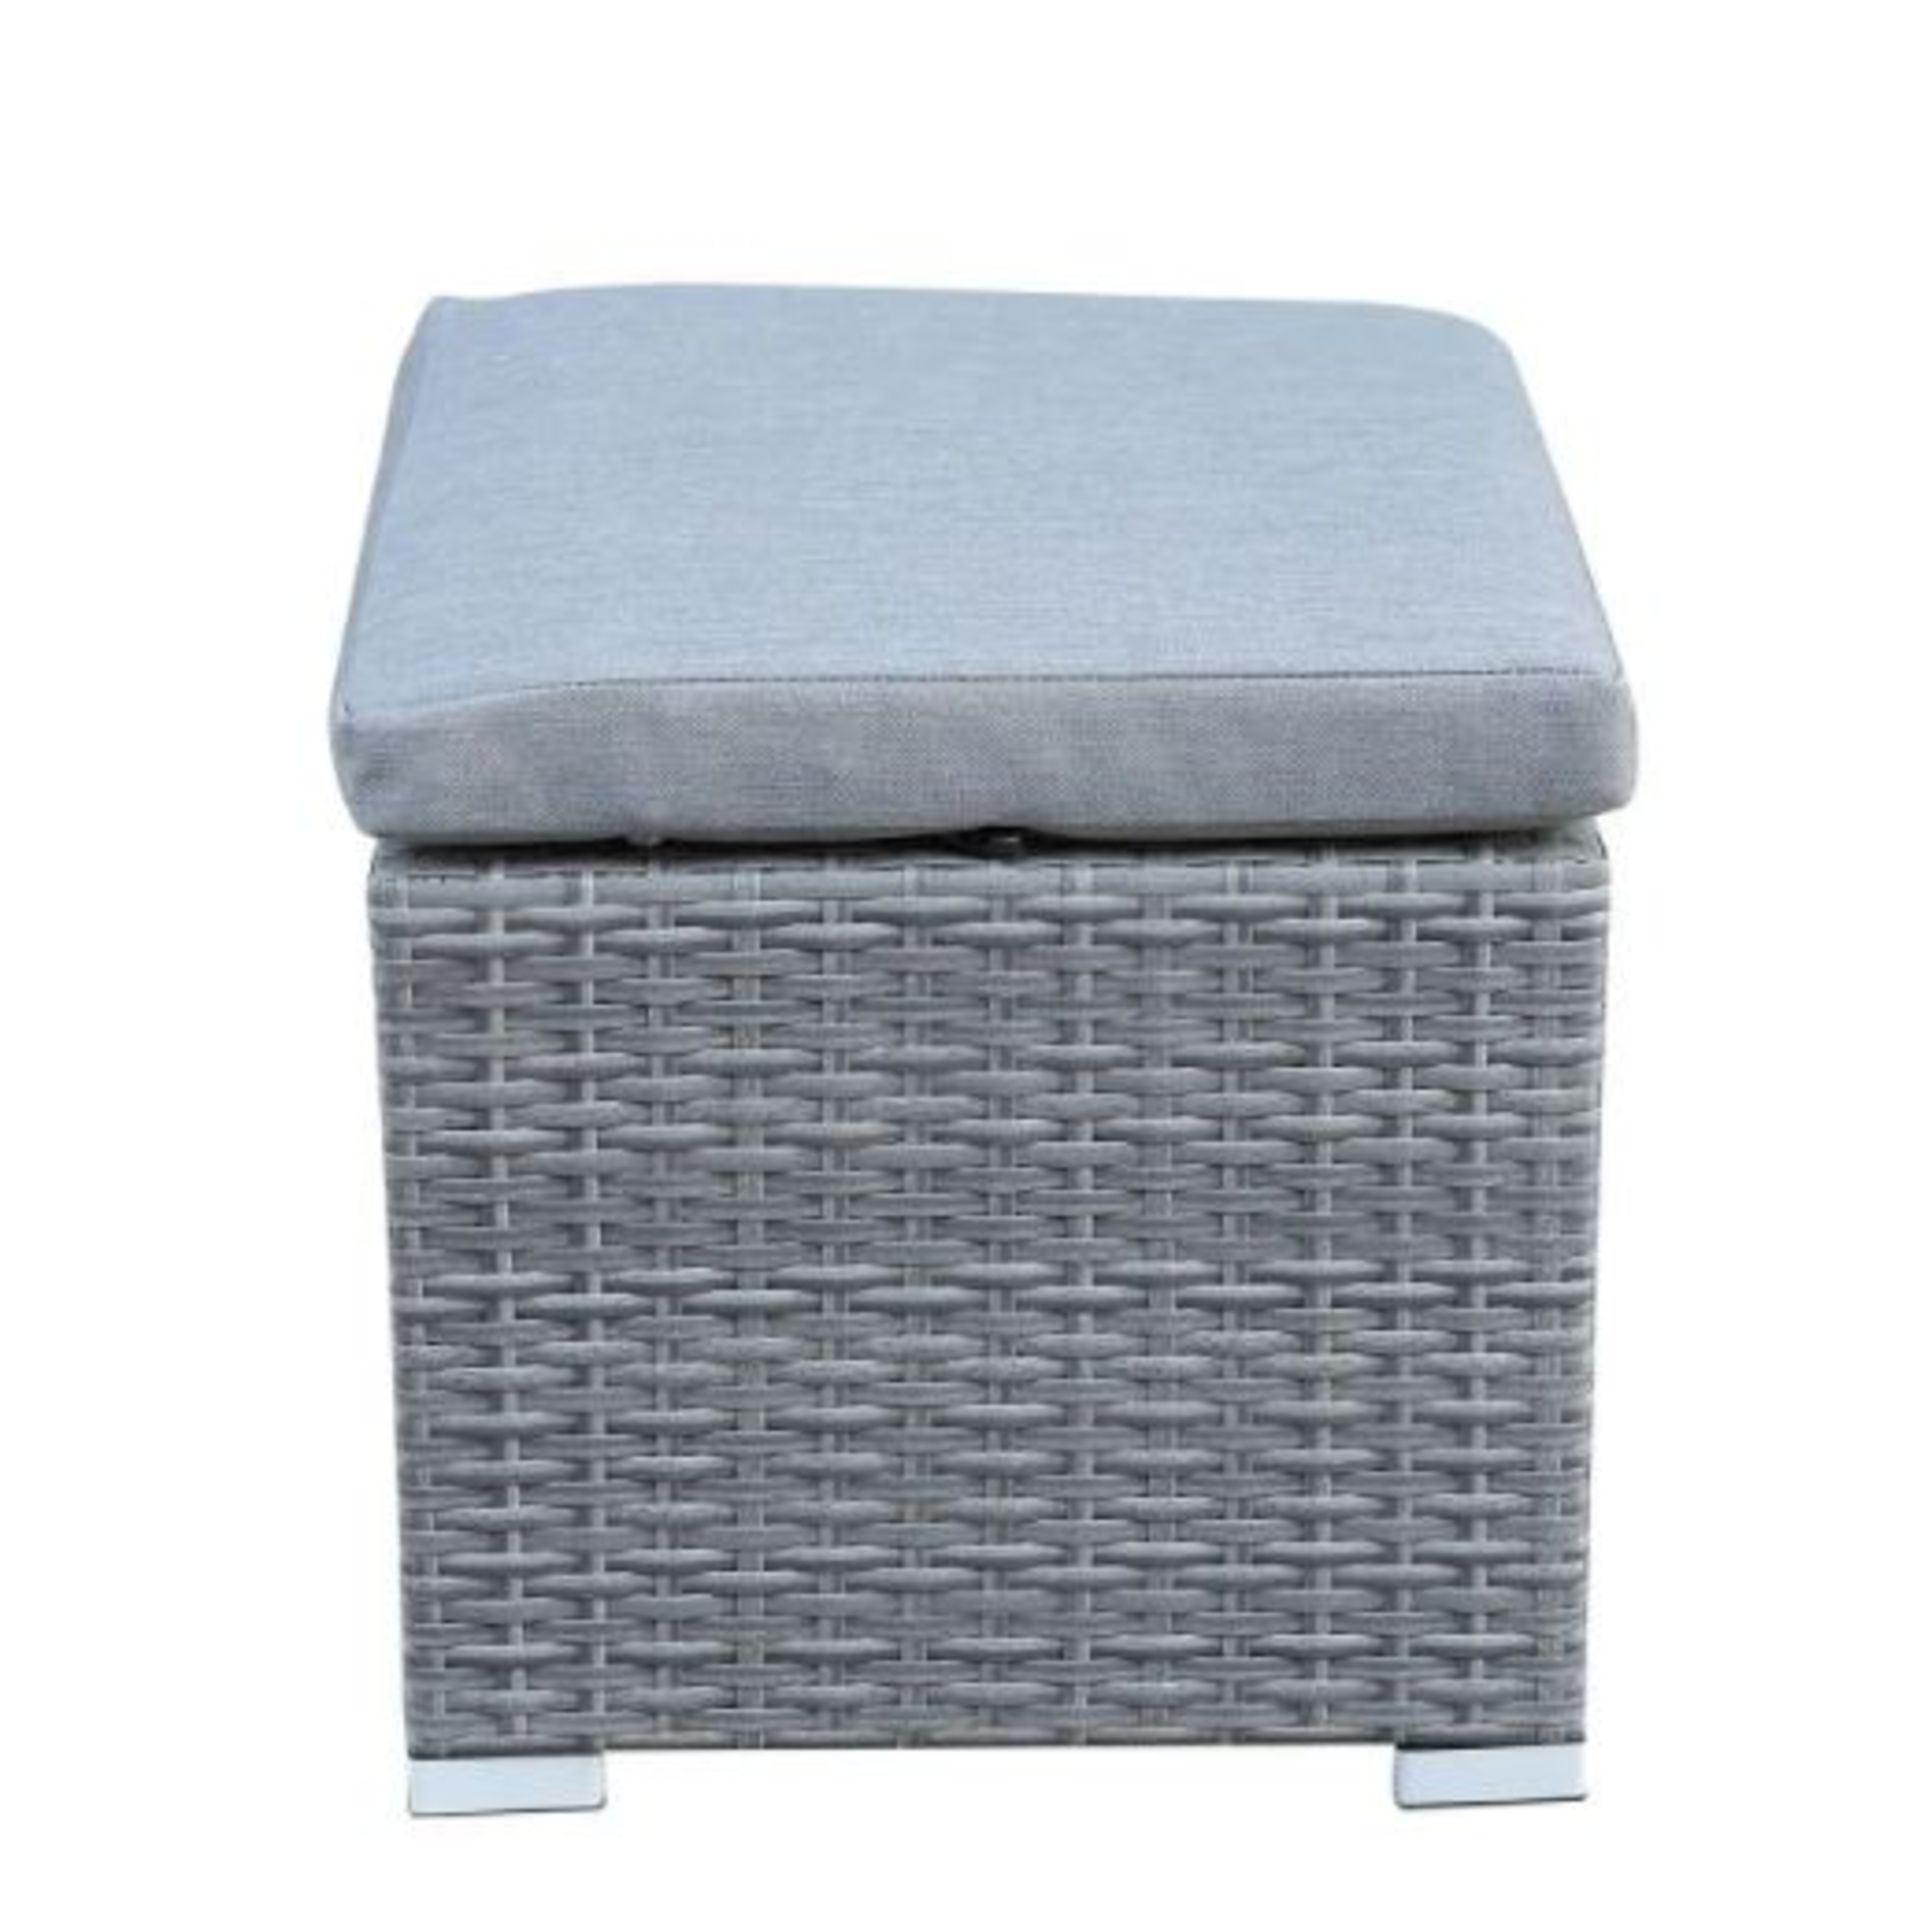 1x Bambrick Cube. 8 Seater Grey Rattan Cube Garden Furniture Set. RRP £800 - Image 4 of 8